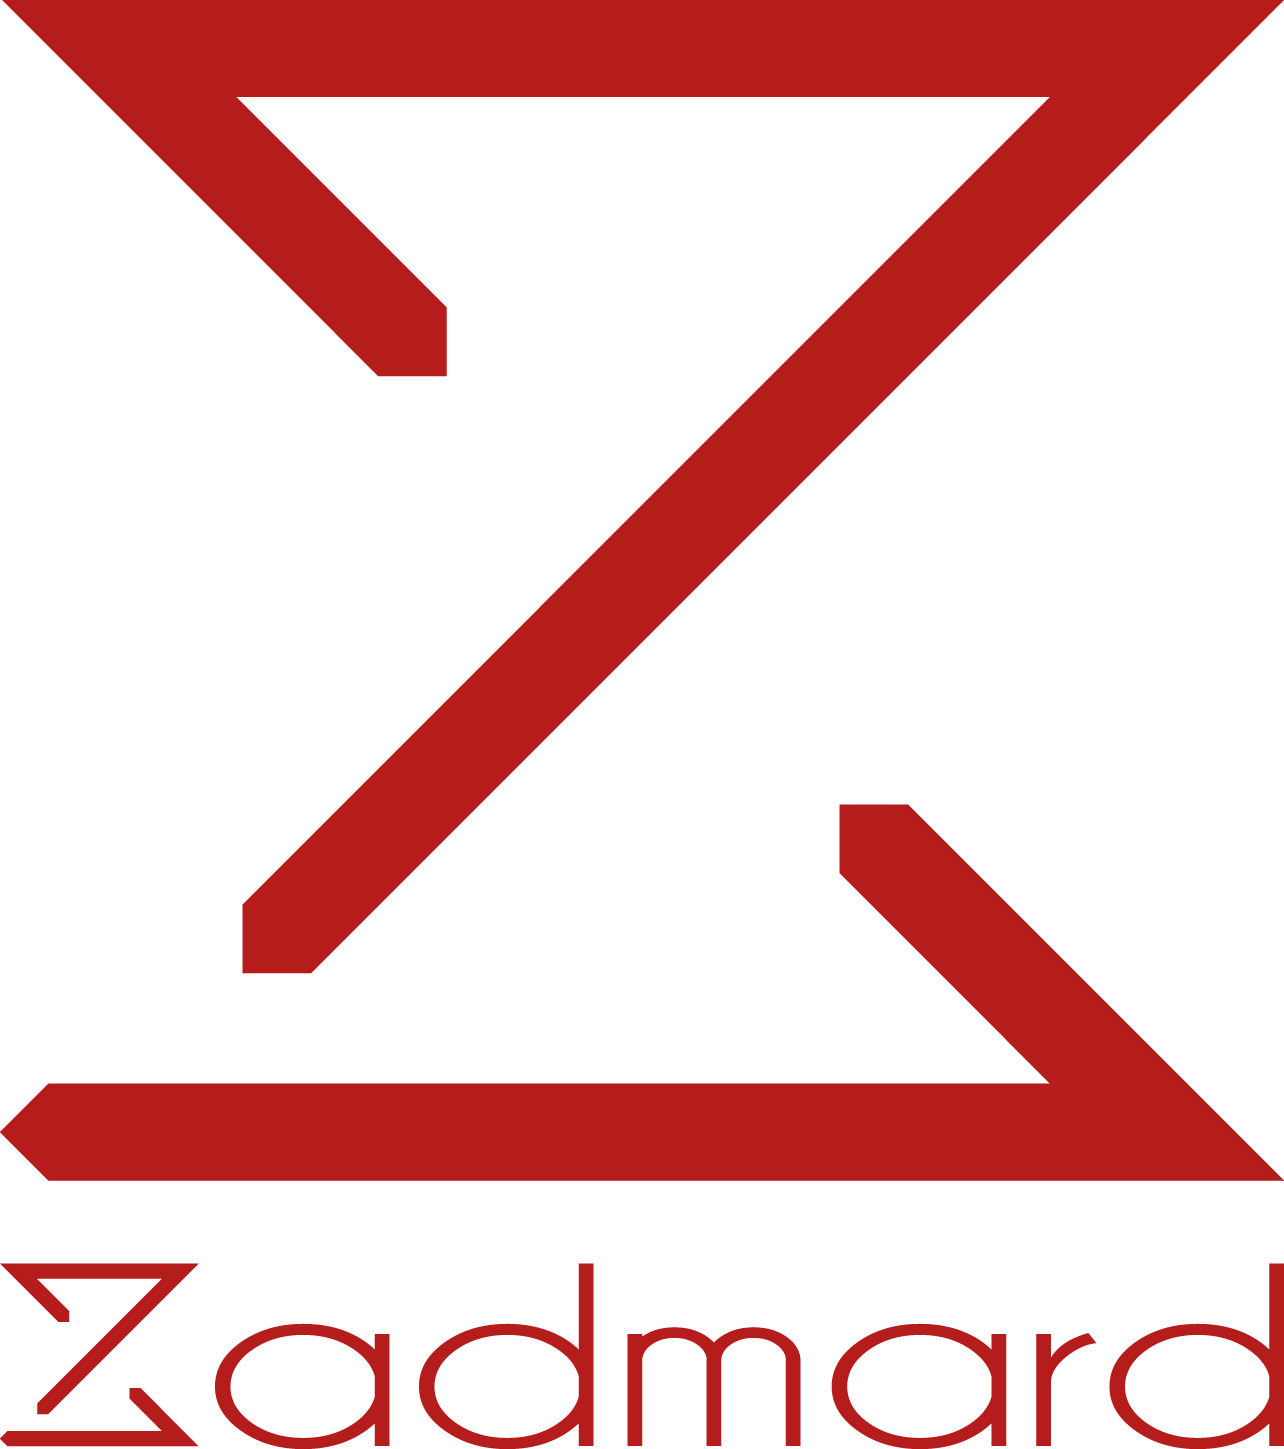 Zadmard GmbH